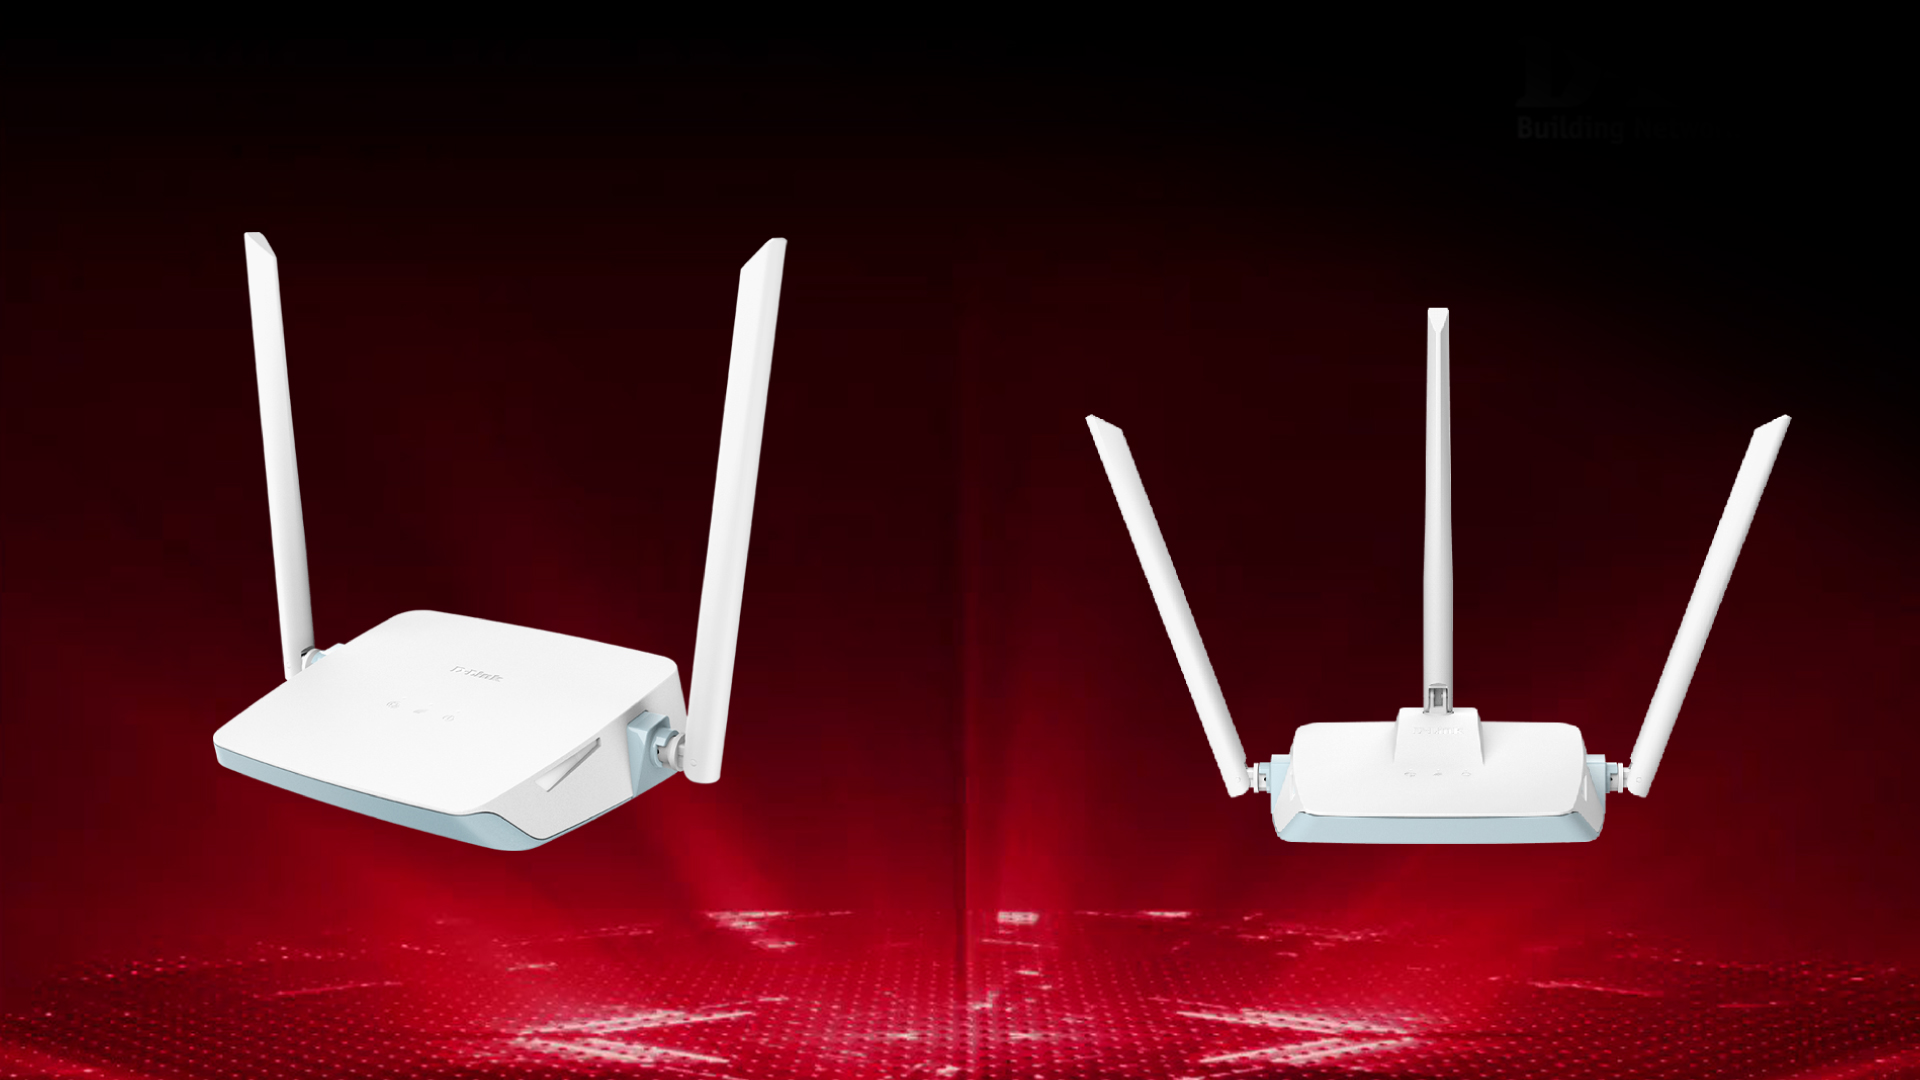 D-link R03 এবং R04 Ethernet Single-Band; Security-Technology তে সেরা!